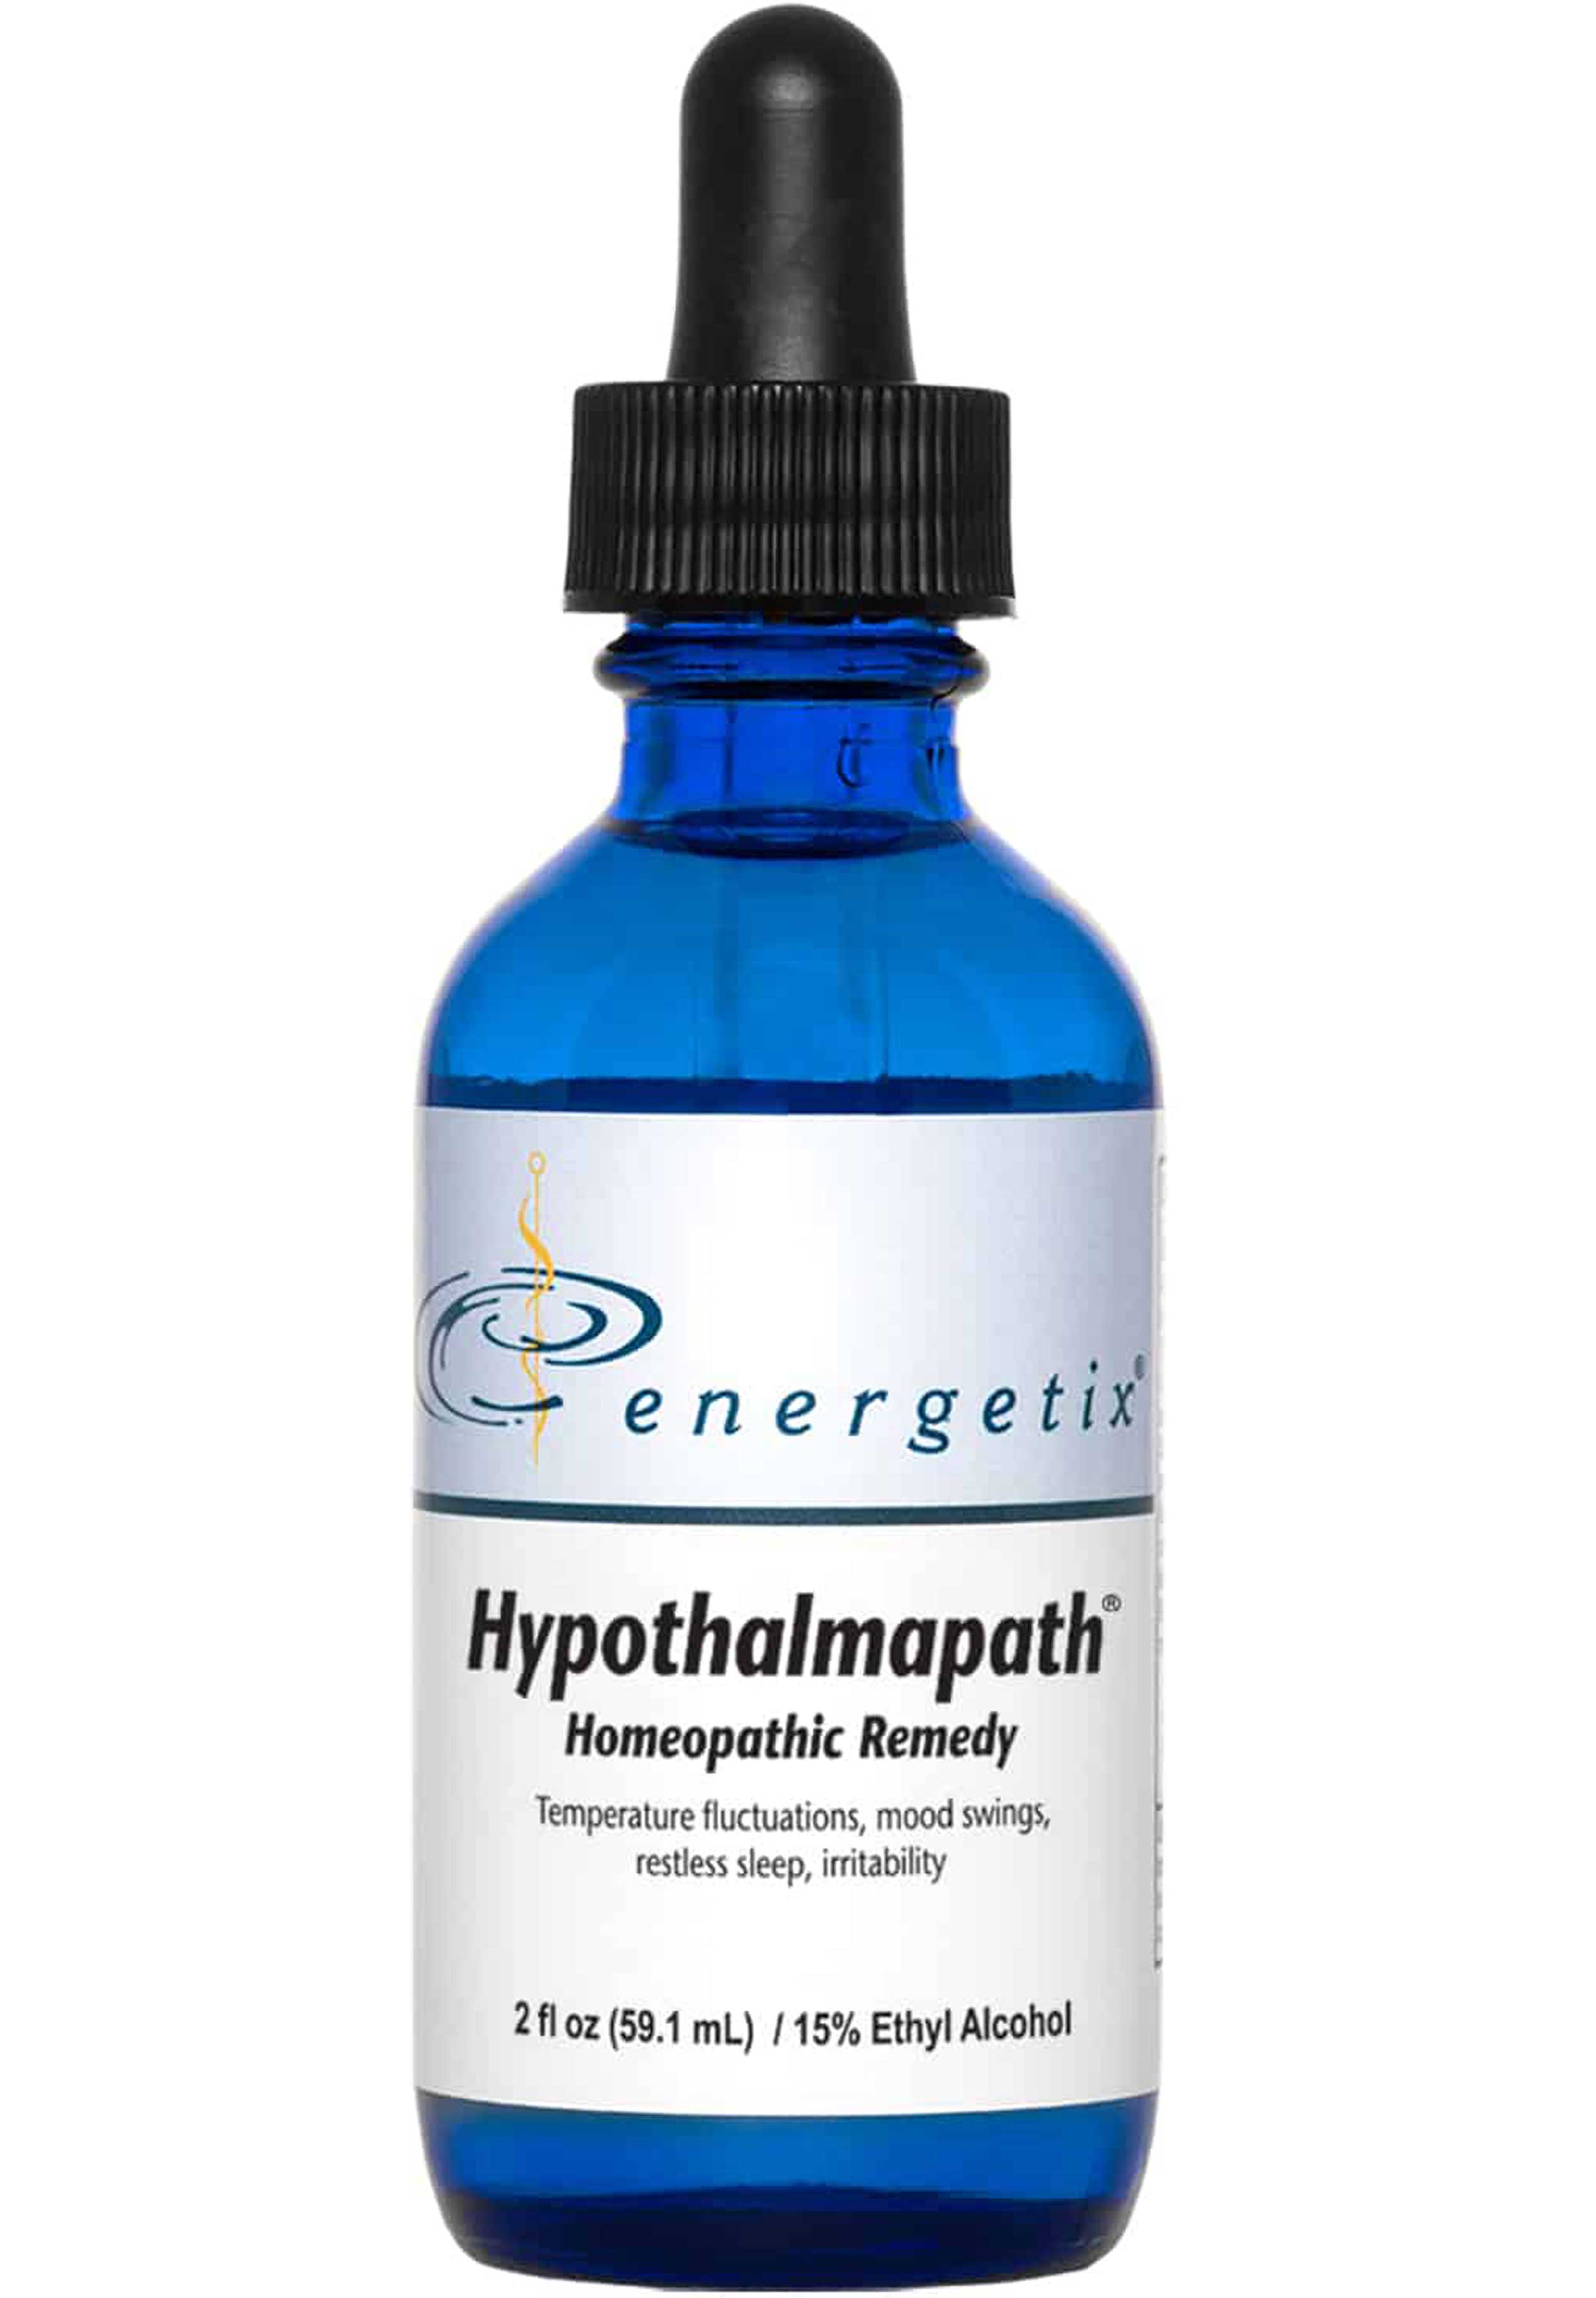 Energetix Hypothalmapath